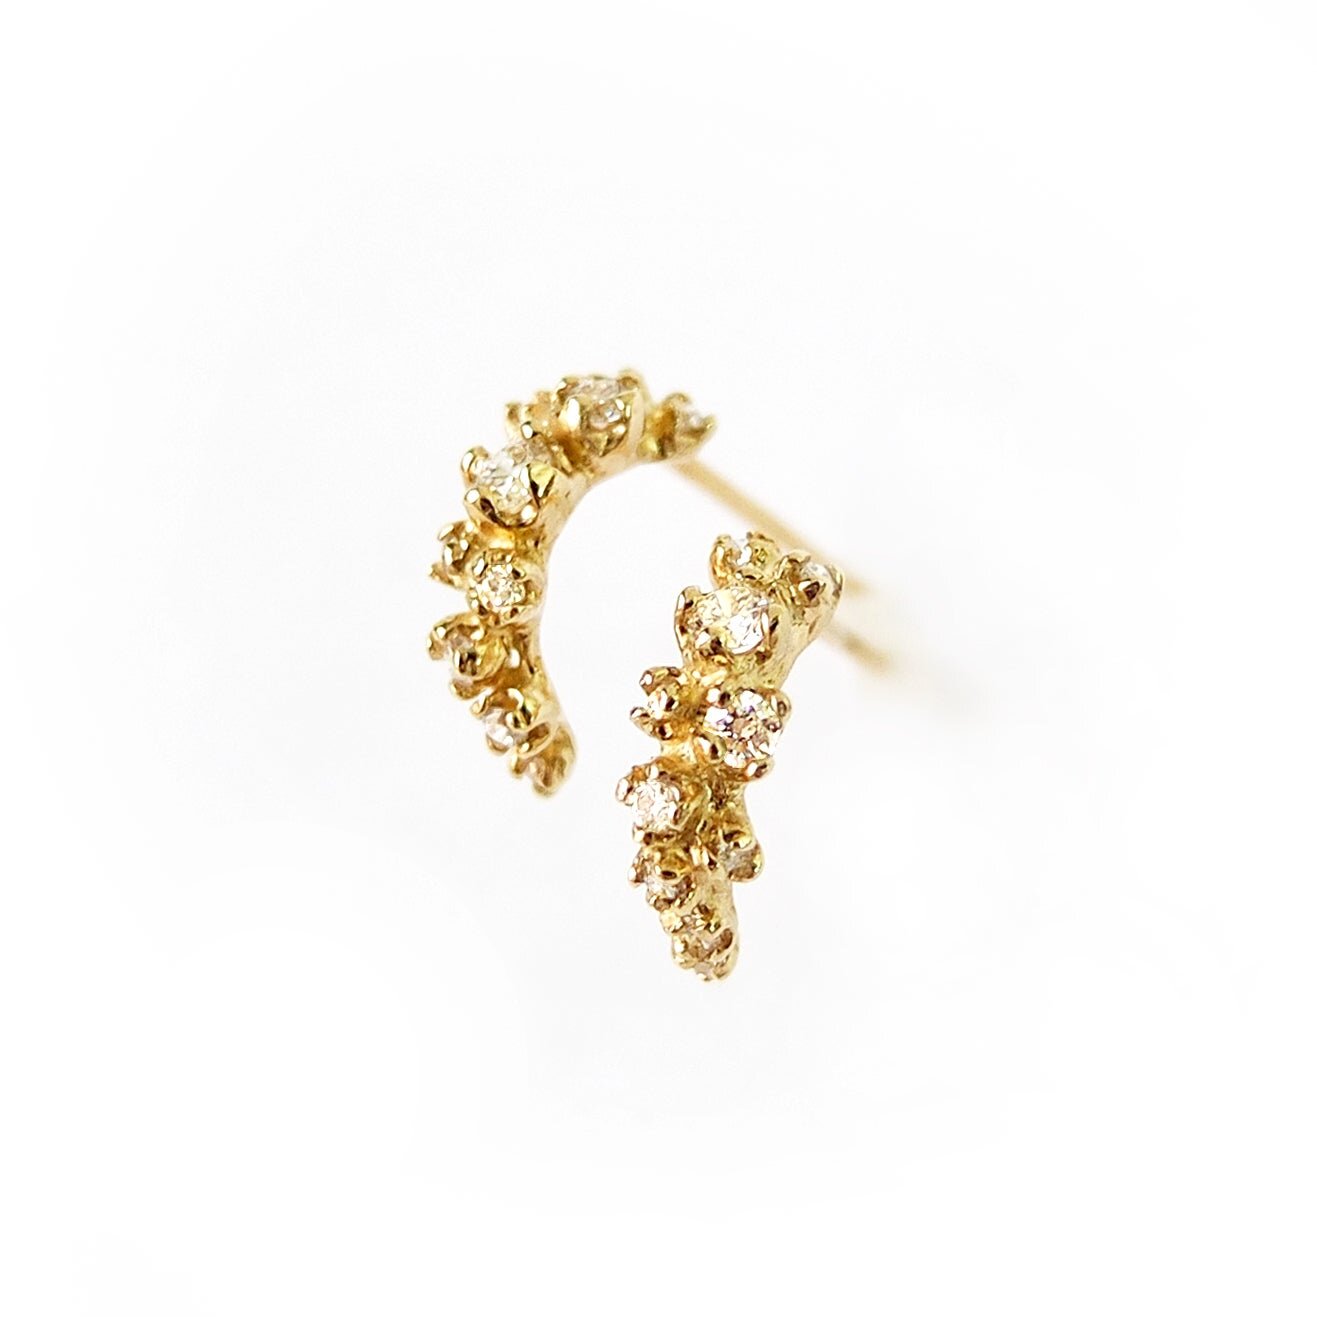 wisteria earrings - diamond